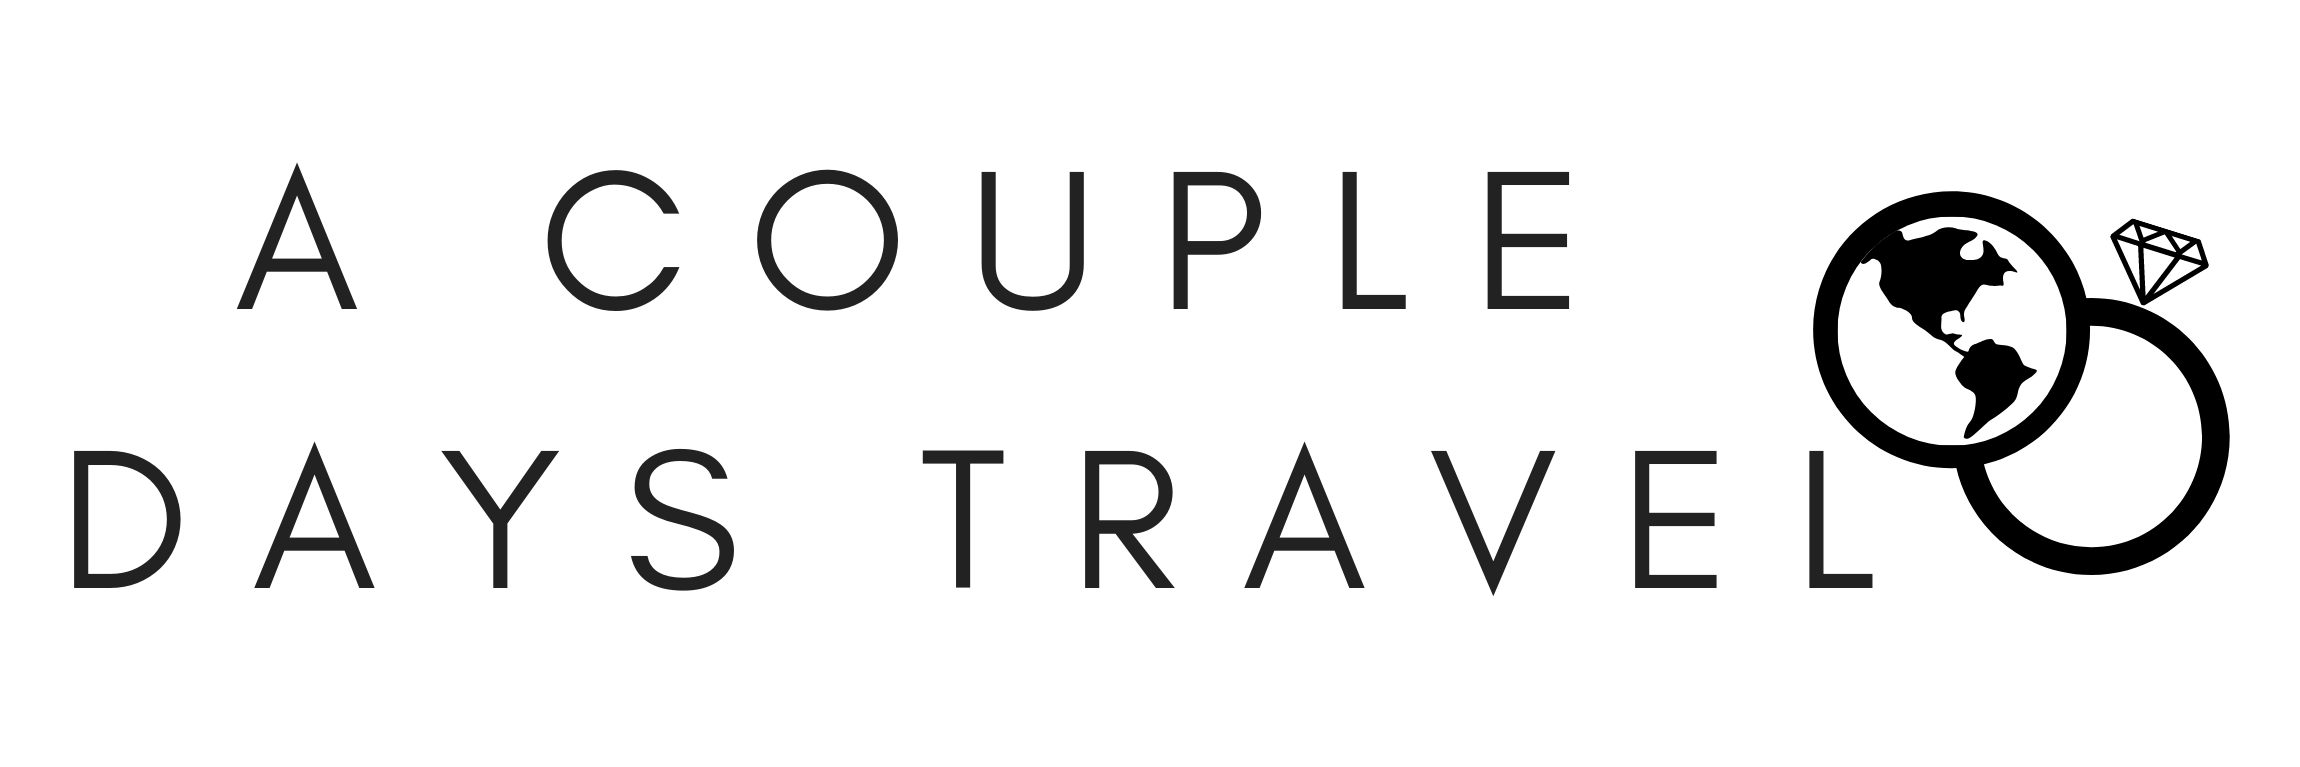 A Couple Days Travel Header Logo